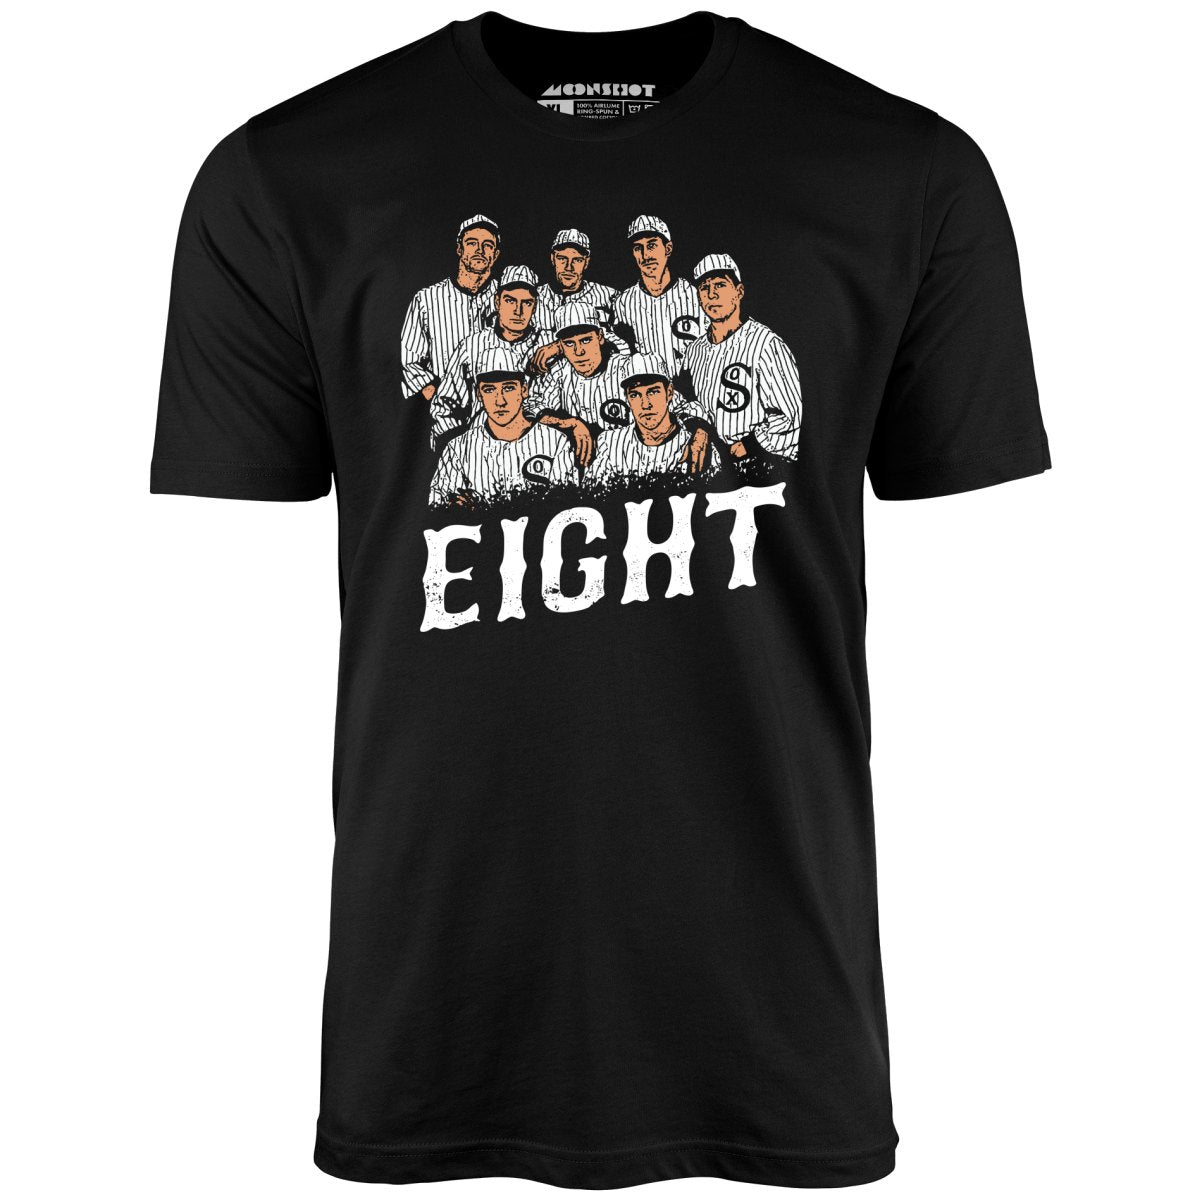 Eight Men Out - Unisex T-Shirt